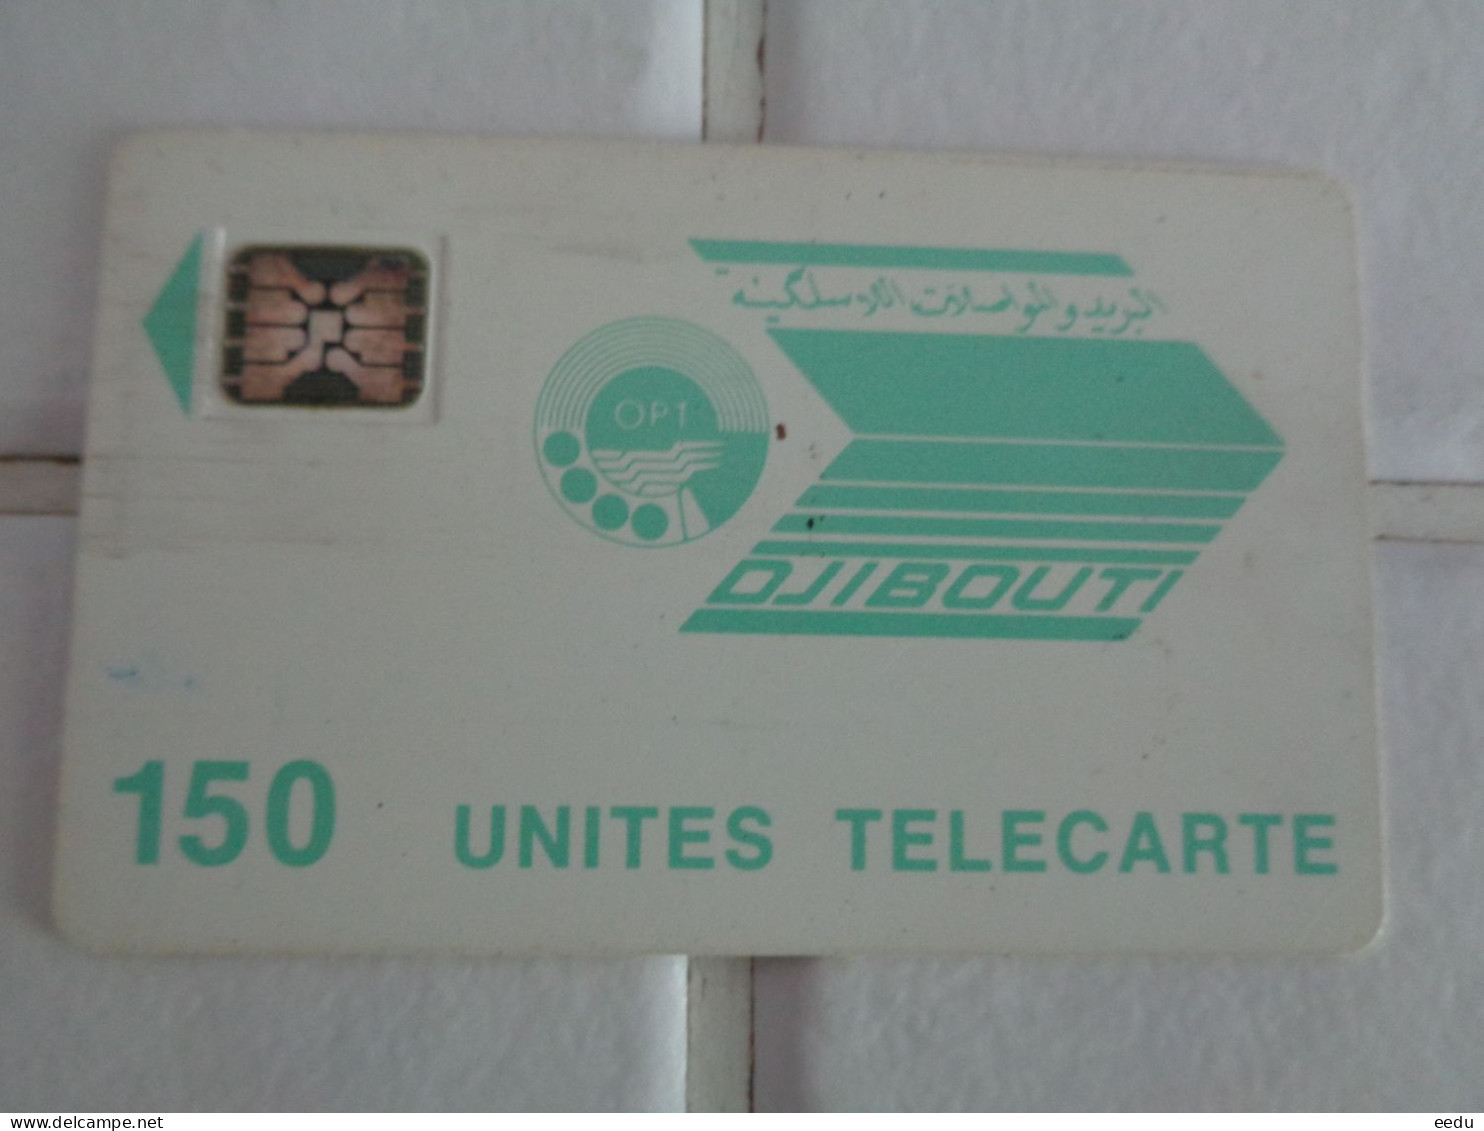 Djibouti Phonecard - Gibuti